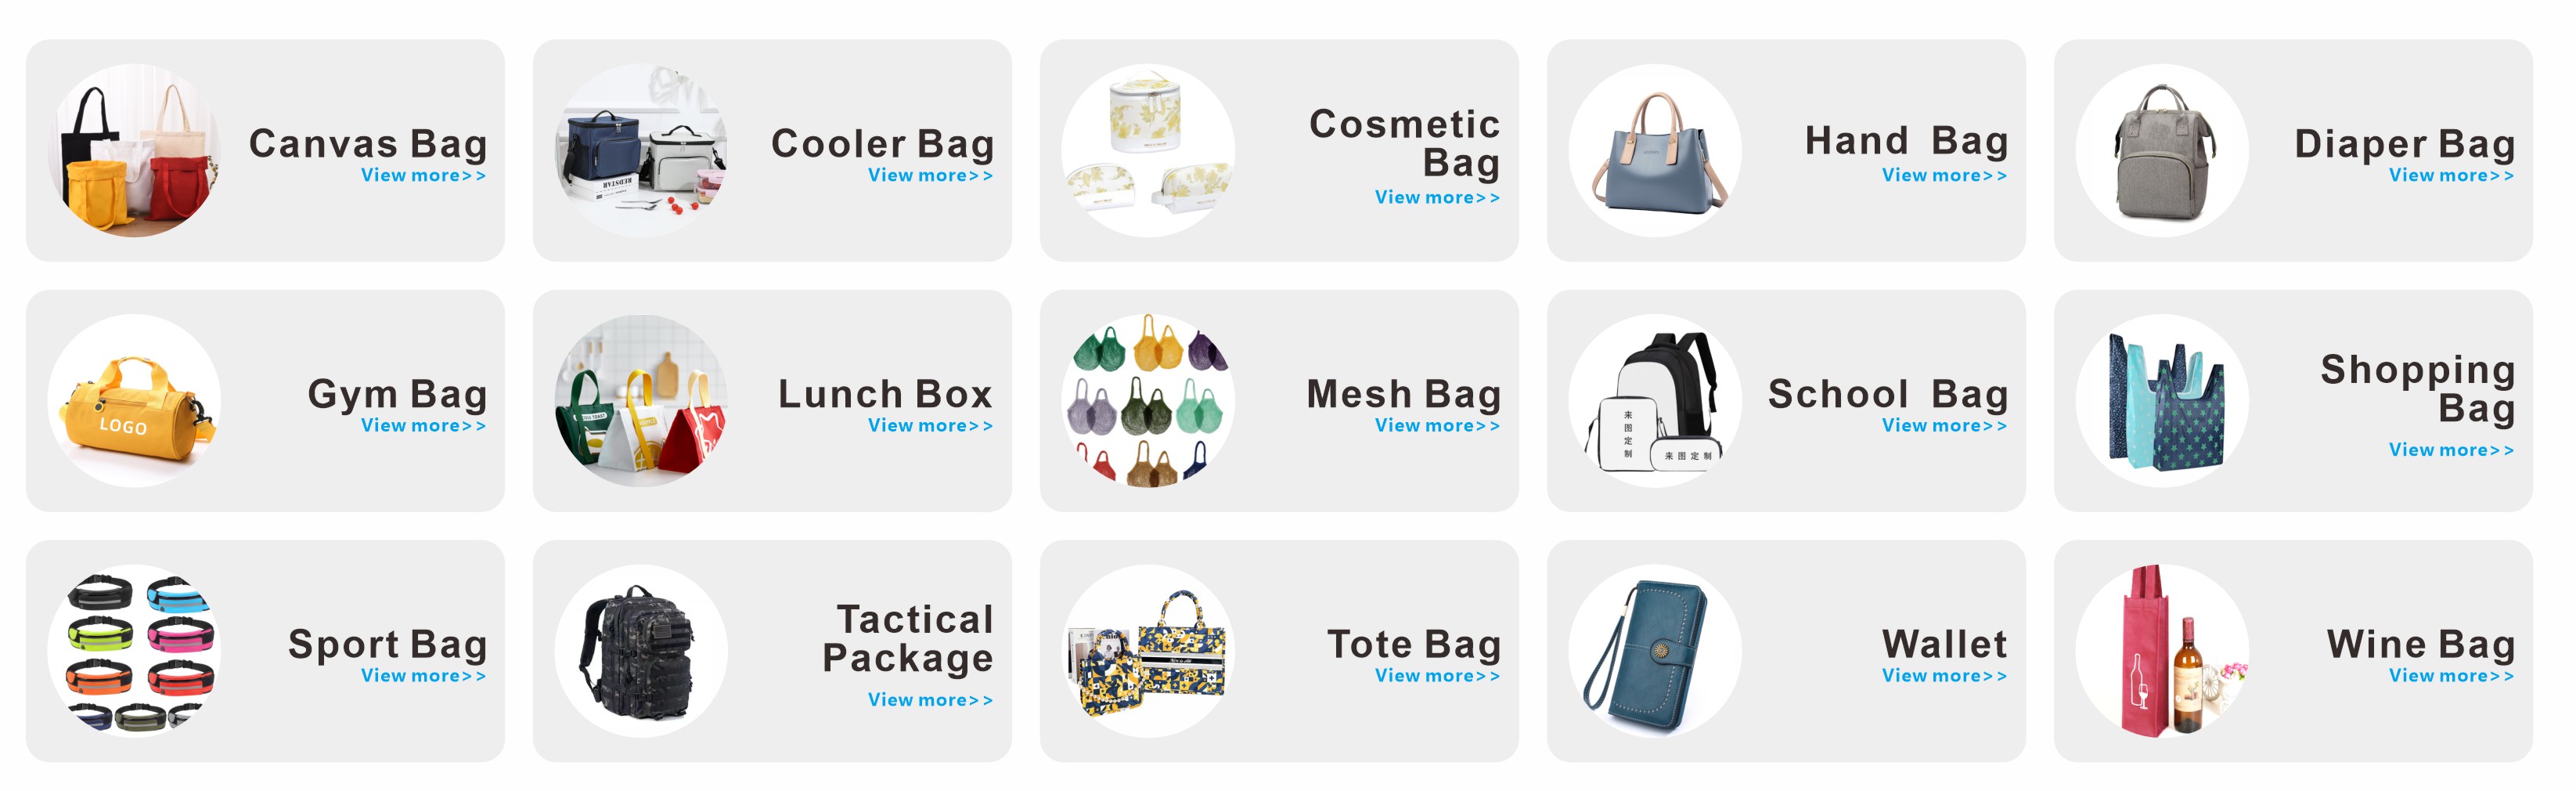 Bag catalogue